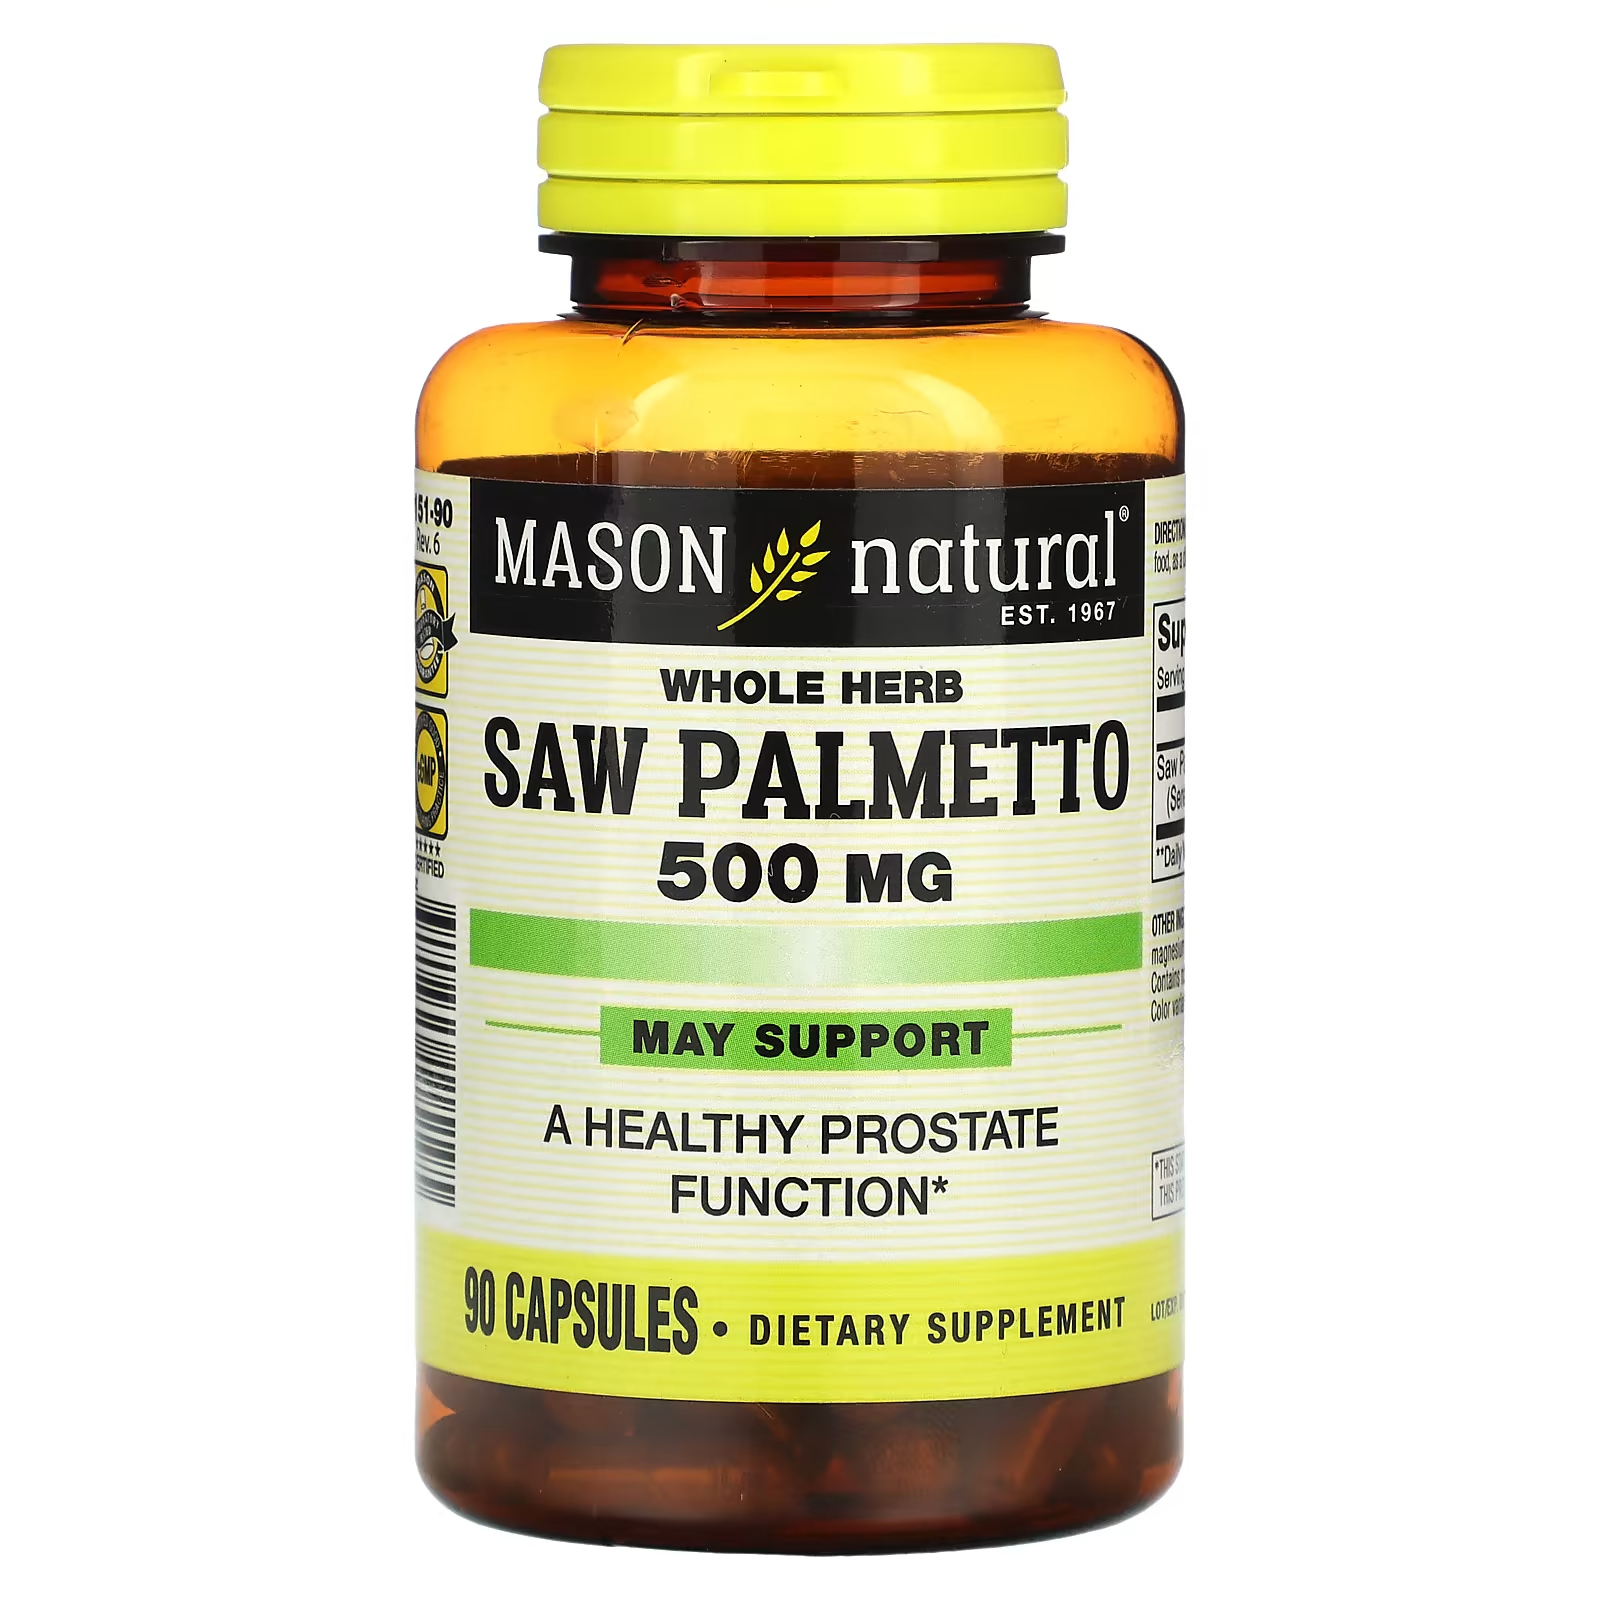 Пищевая добавка Mason Natural аальма сереноа из цельной травы, 500 мг, 90 капсул